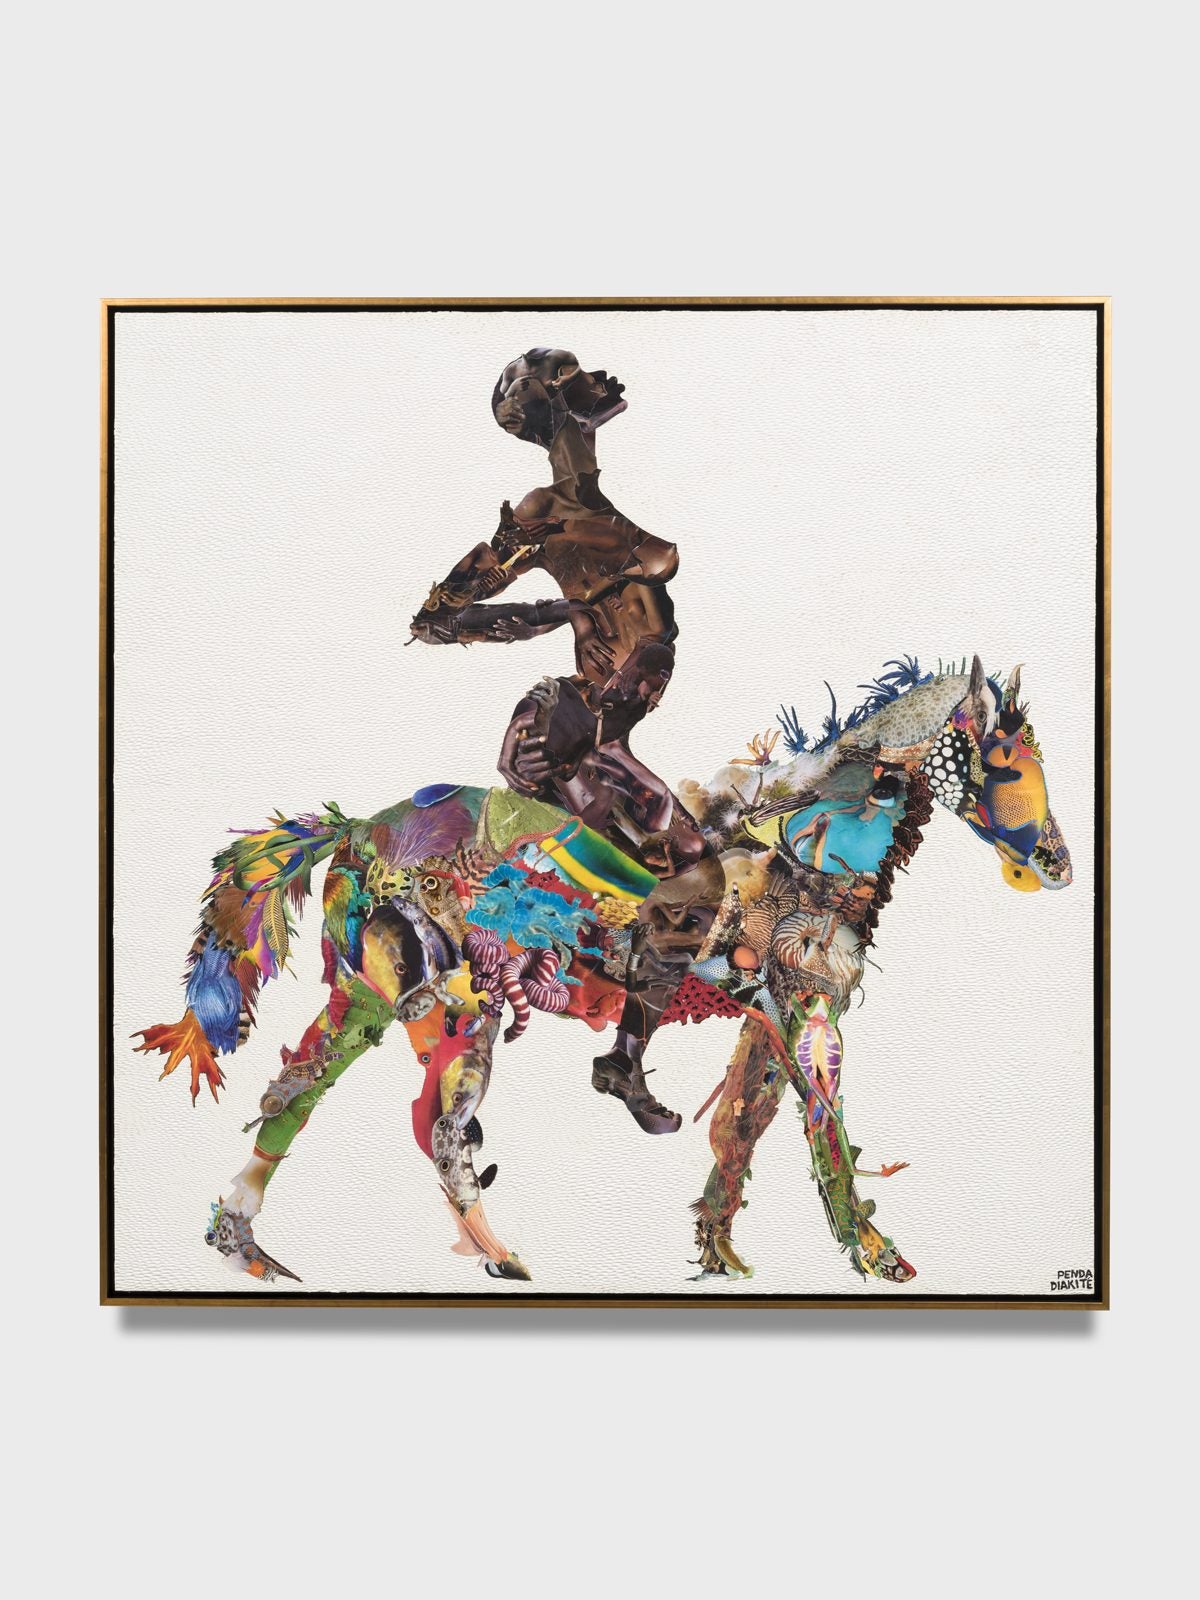 Penda Diakité’s ‘Mansa Musso’ Celebrates Women In West African History Through Art